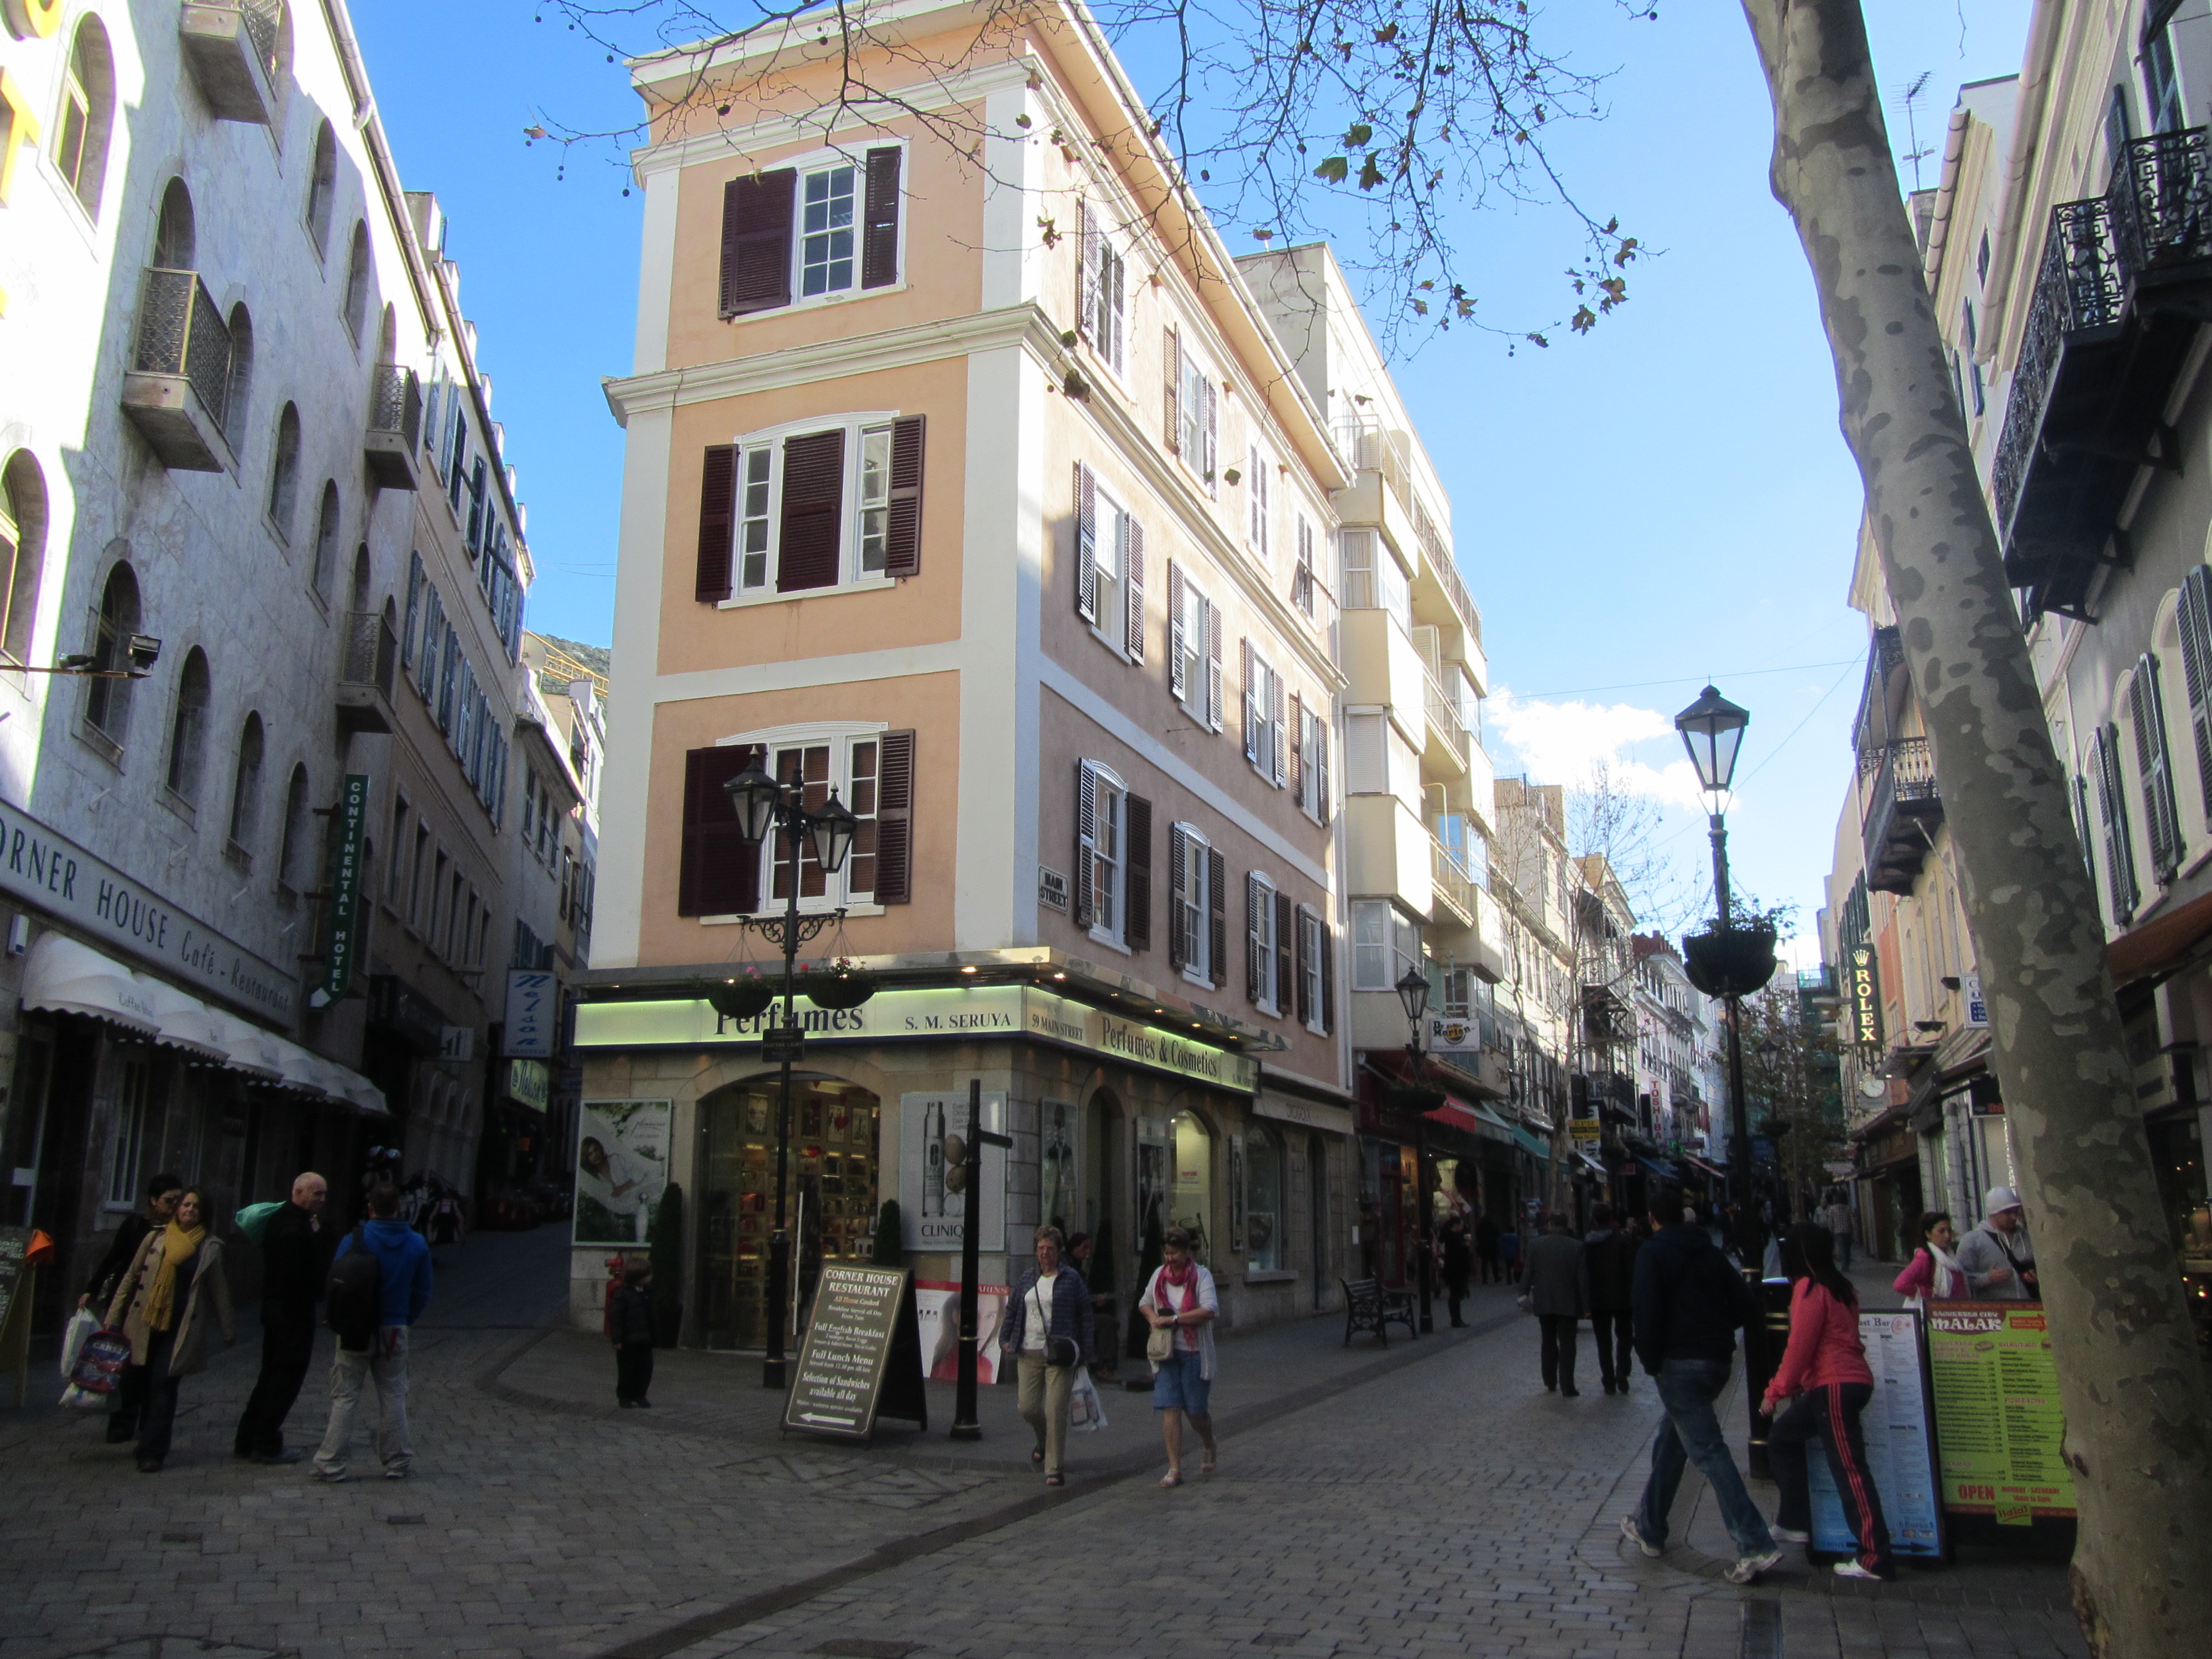 A look around Main Street Gibraltar